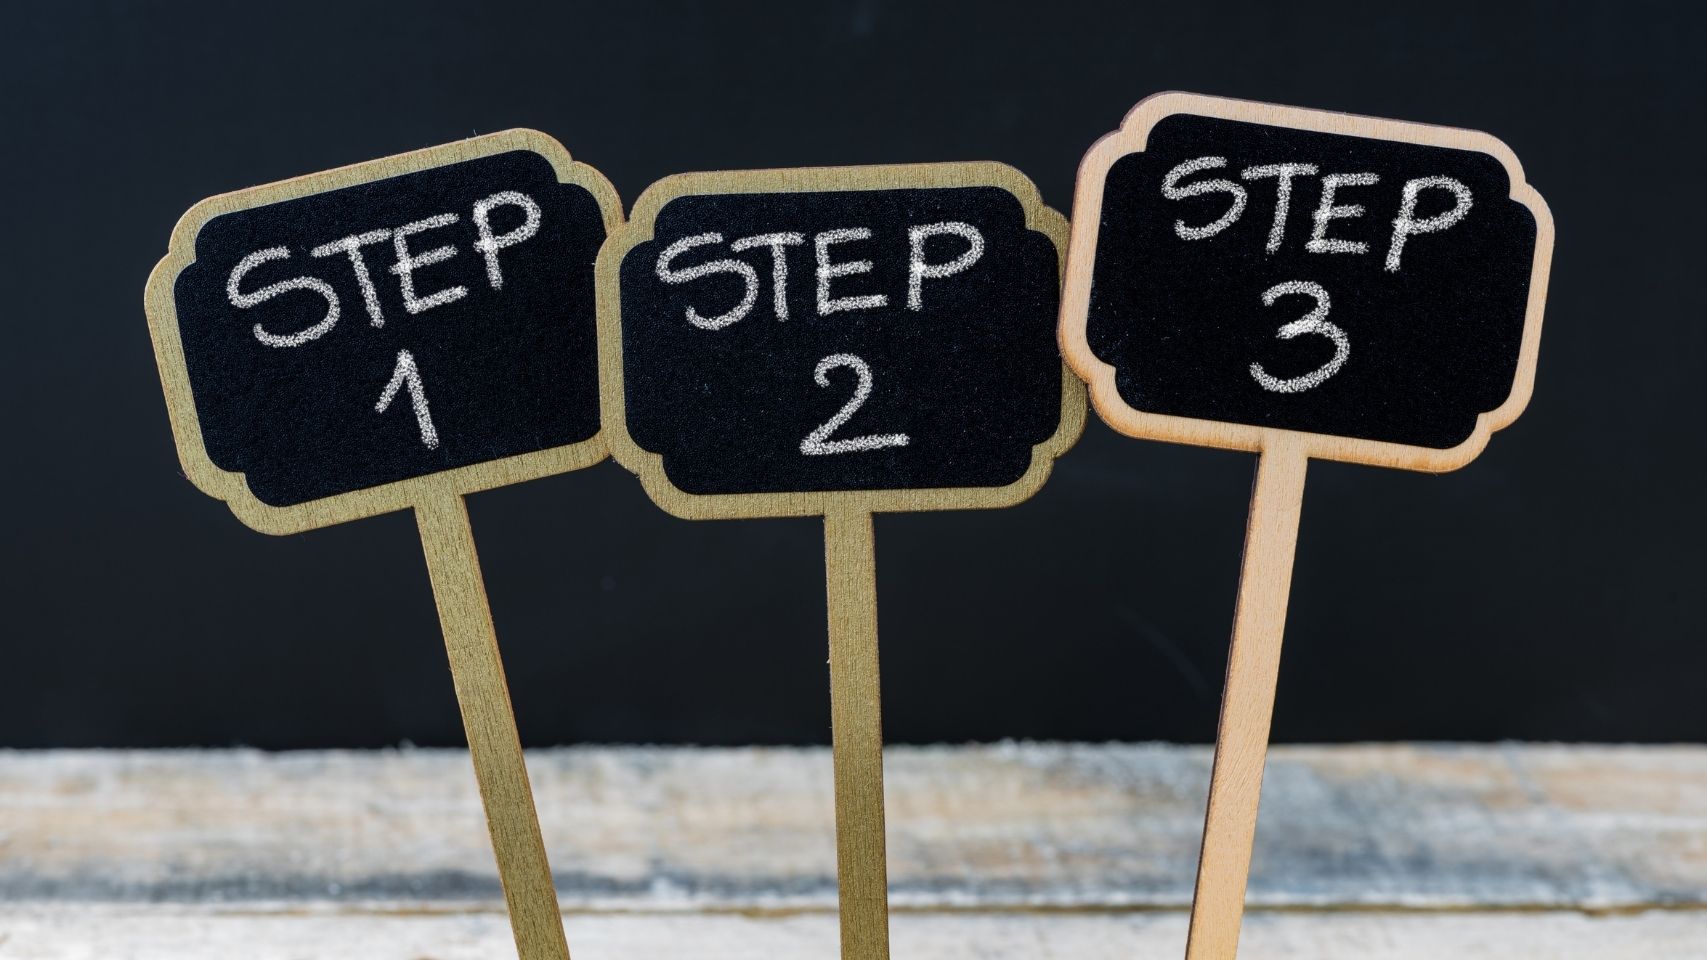 3 Steps to a Powerful Marketing Story